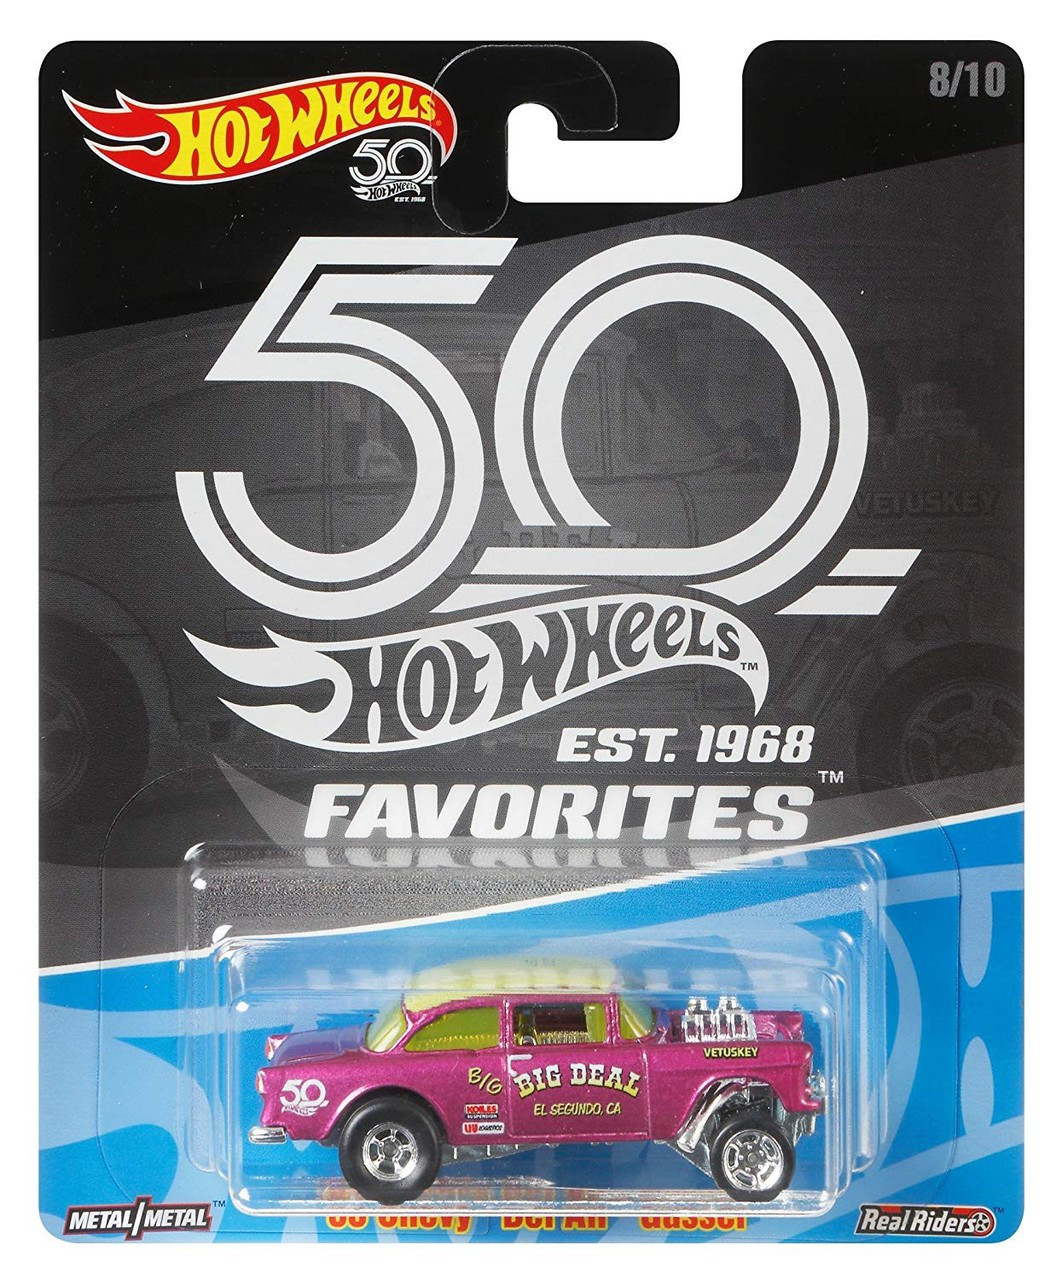 2018 hot wheels 50th anniversary favorites